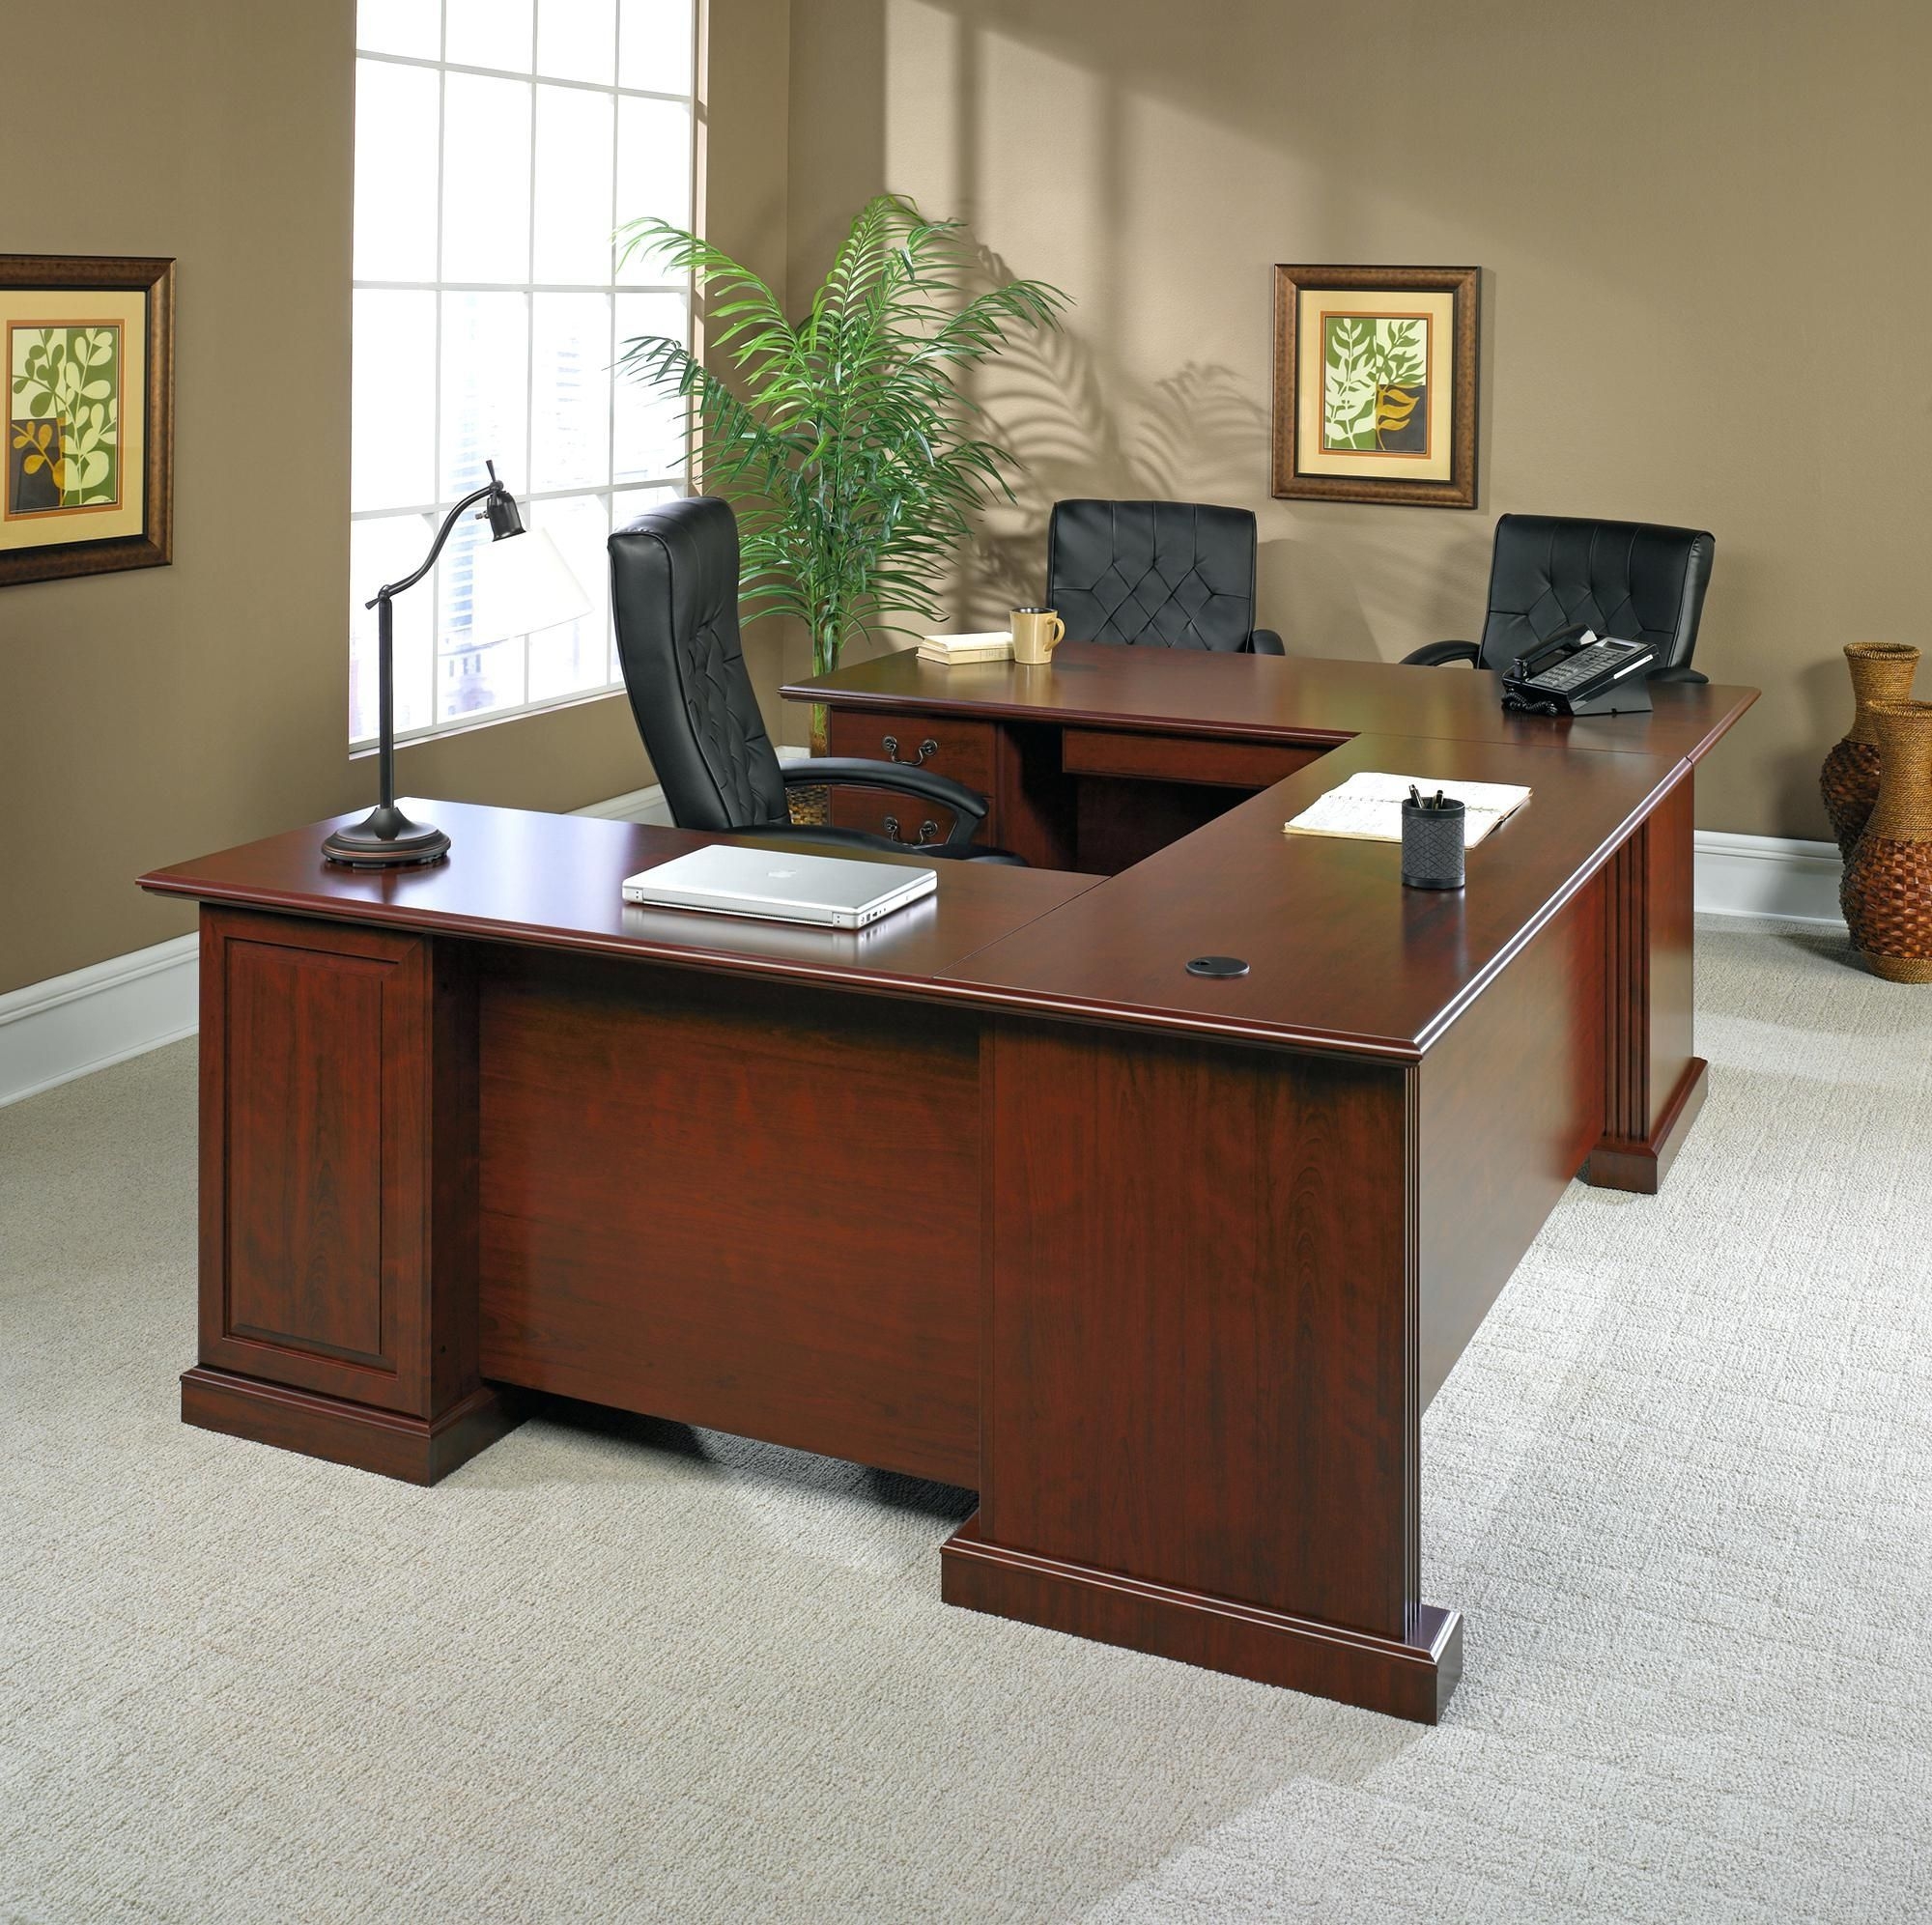 Executive desk sets